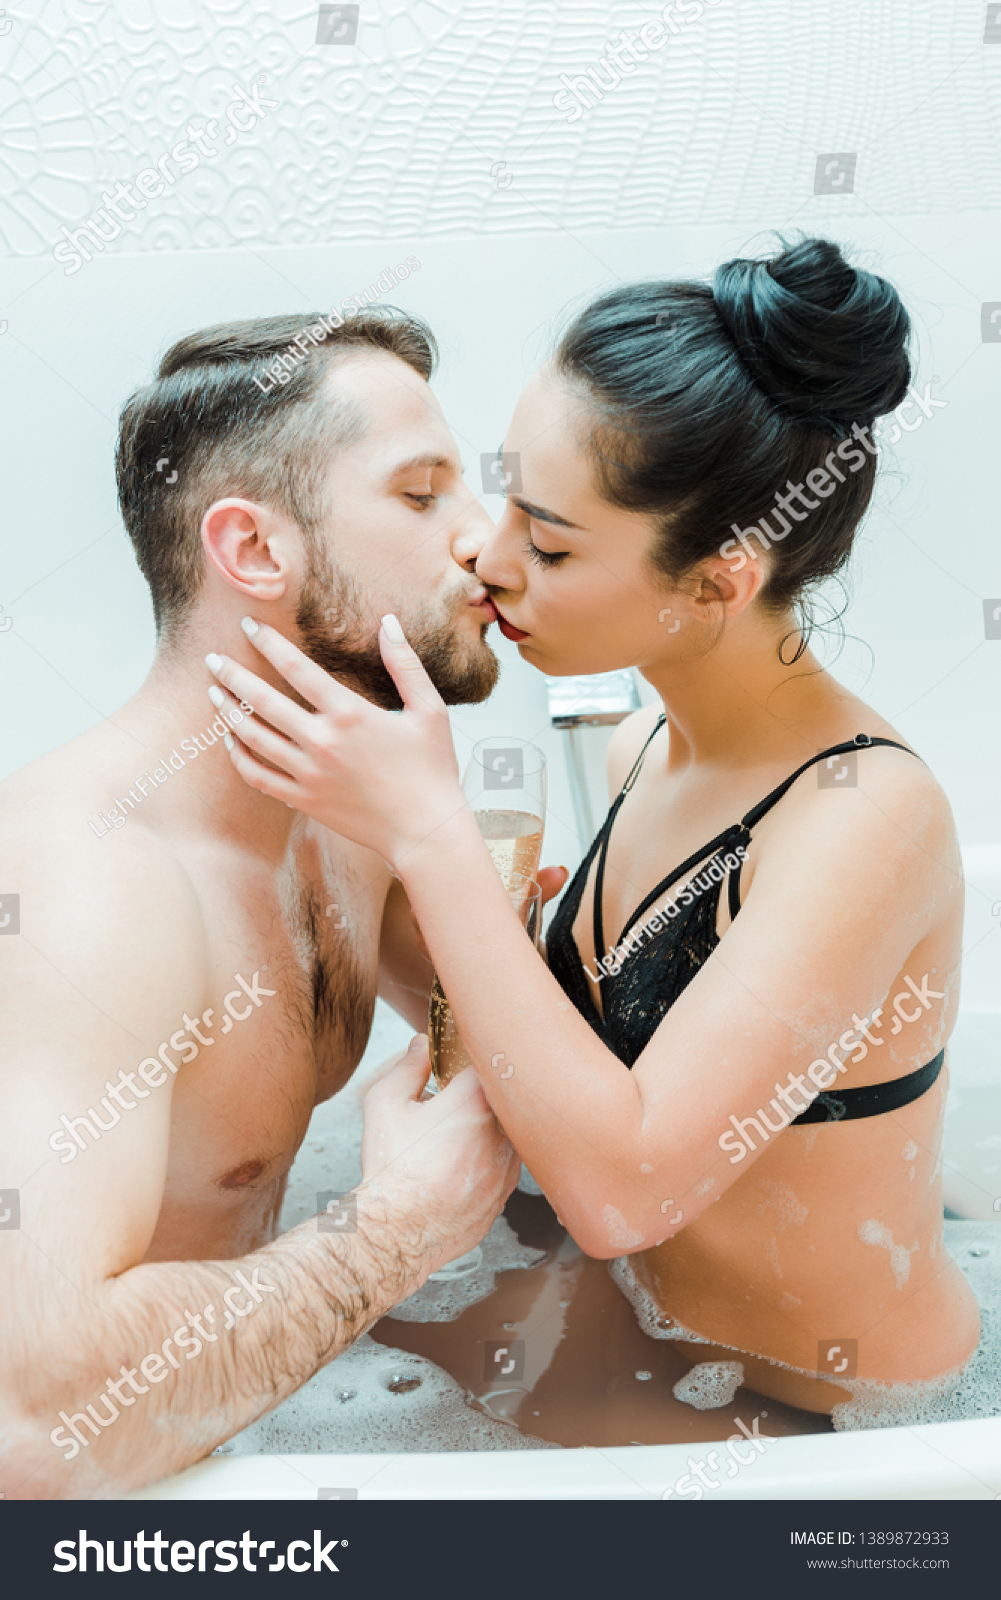 dan zacharias recommends sexy women kissing men pic